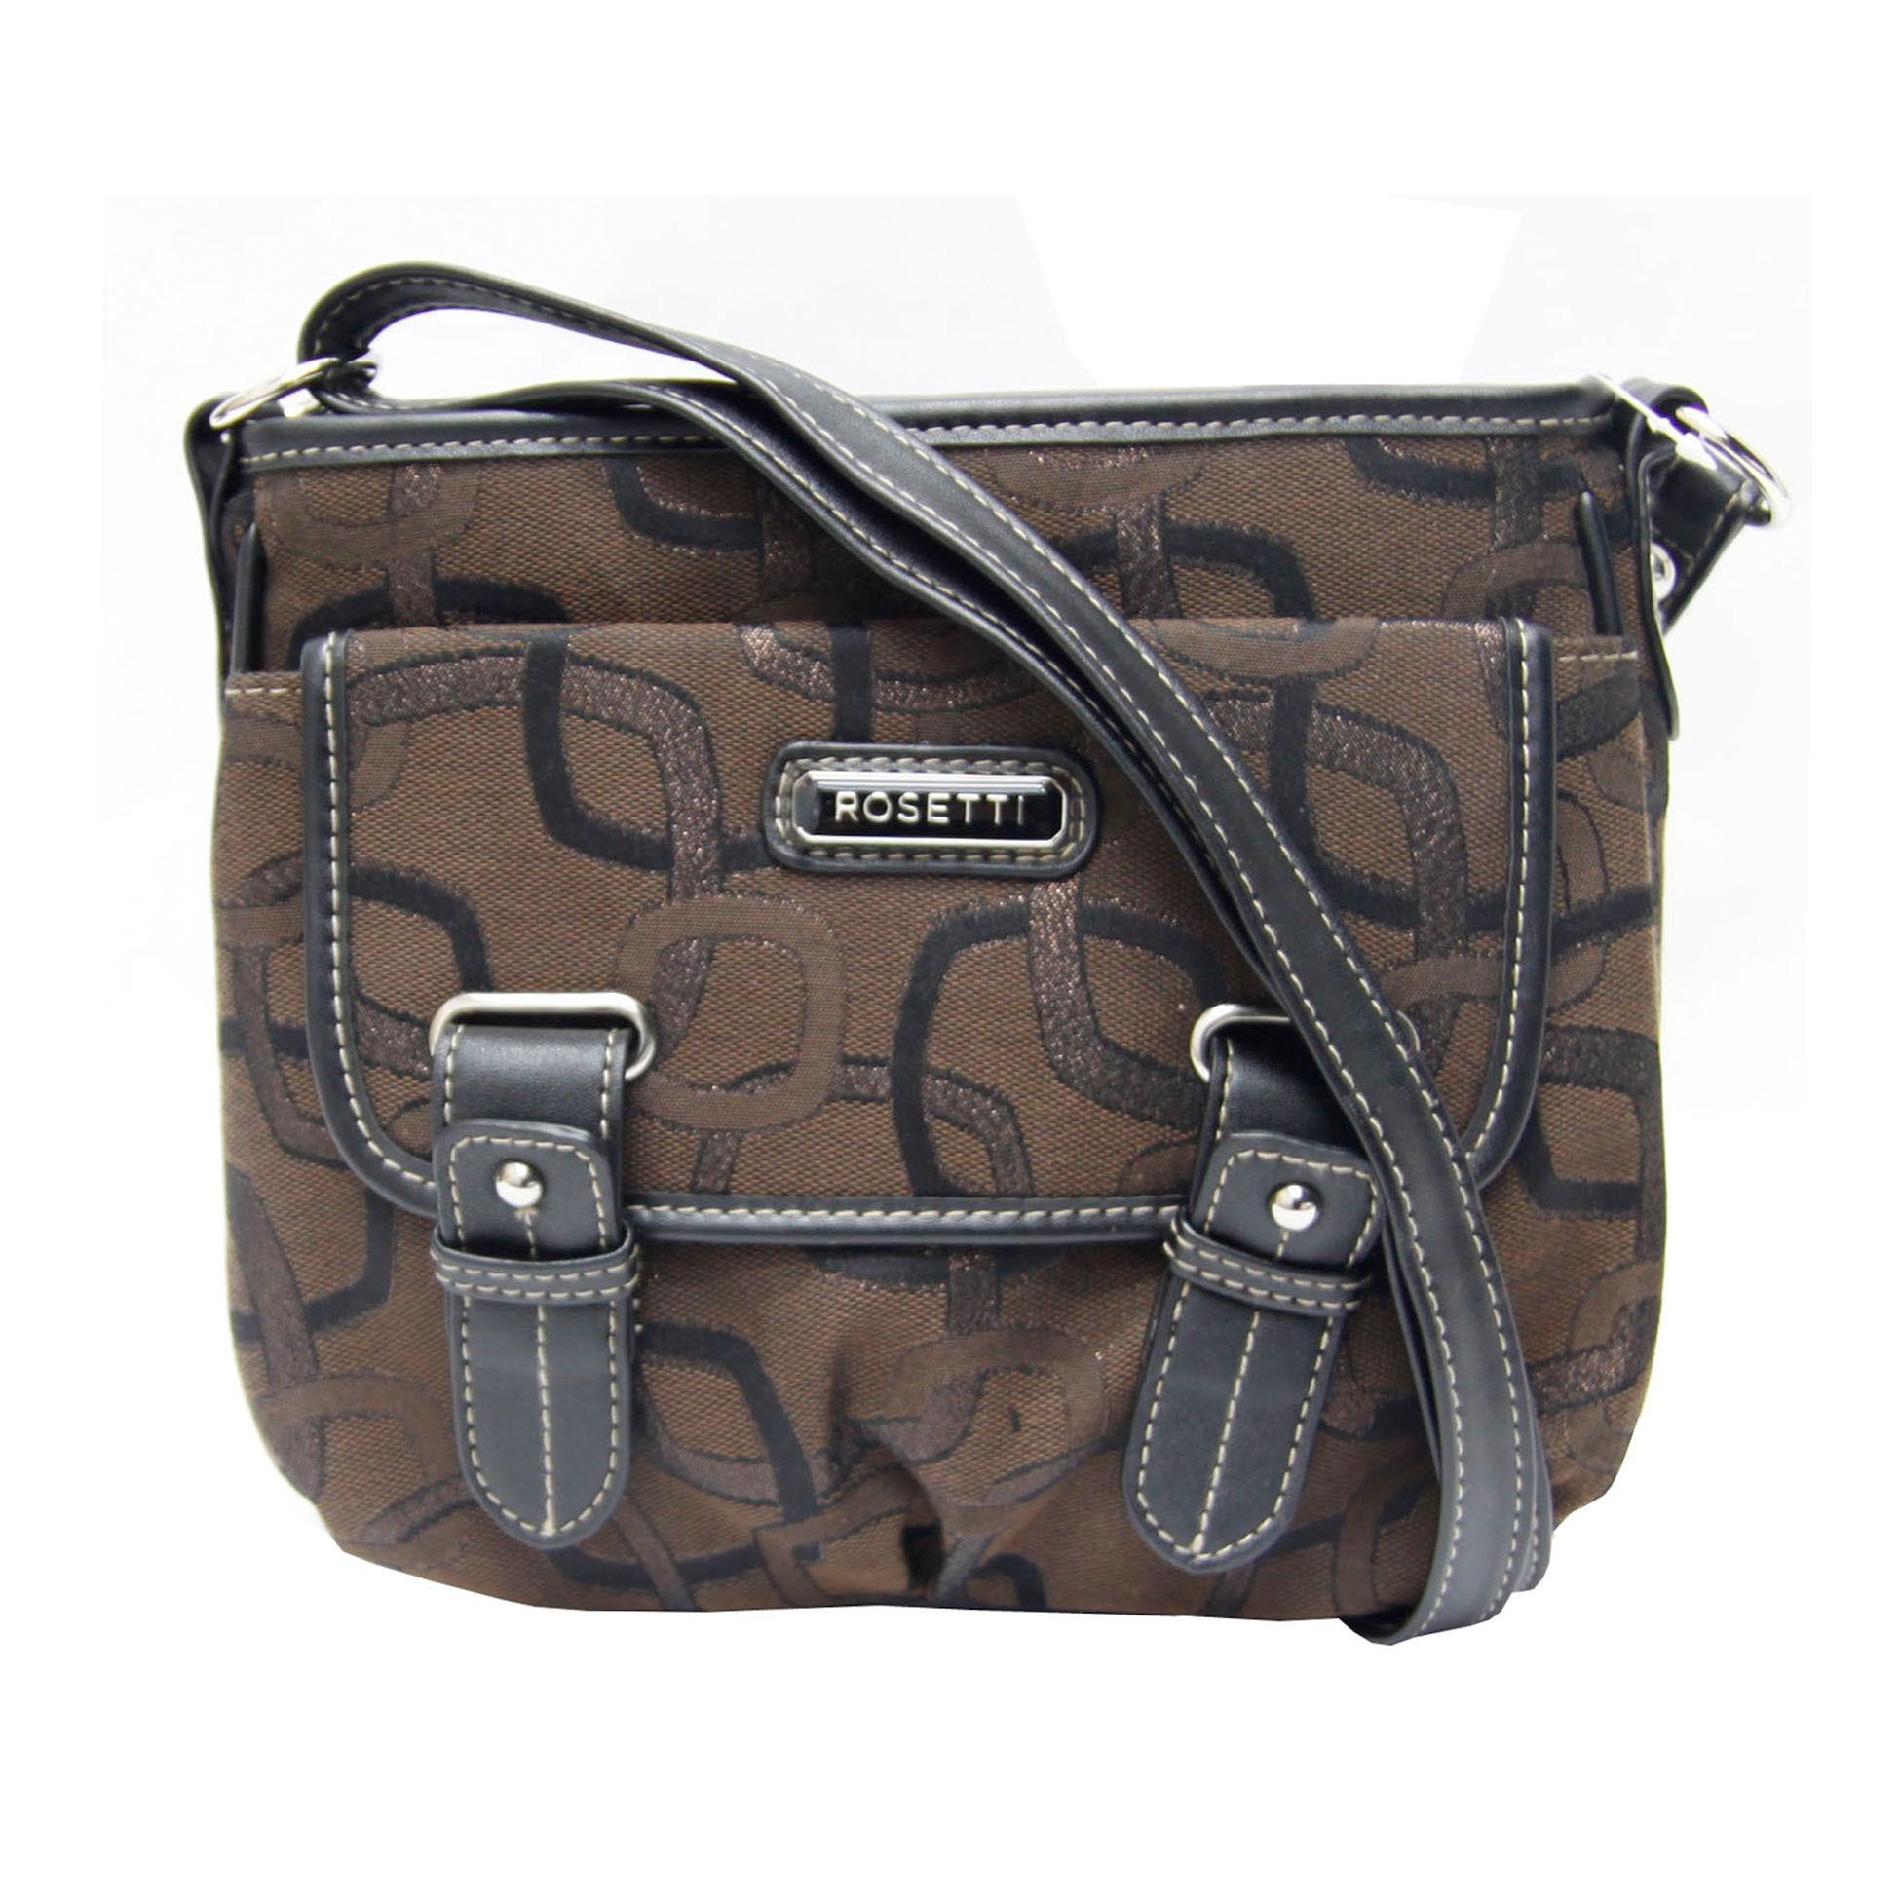 Rosetti Women's Mini Handbag - Geometric Jacquard